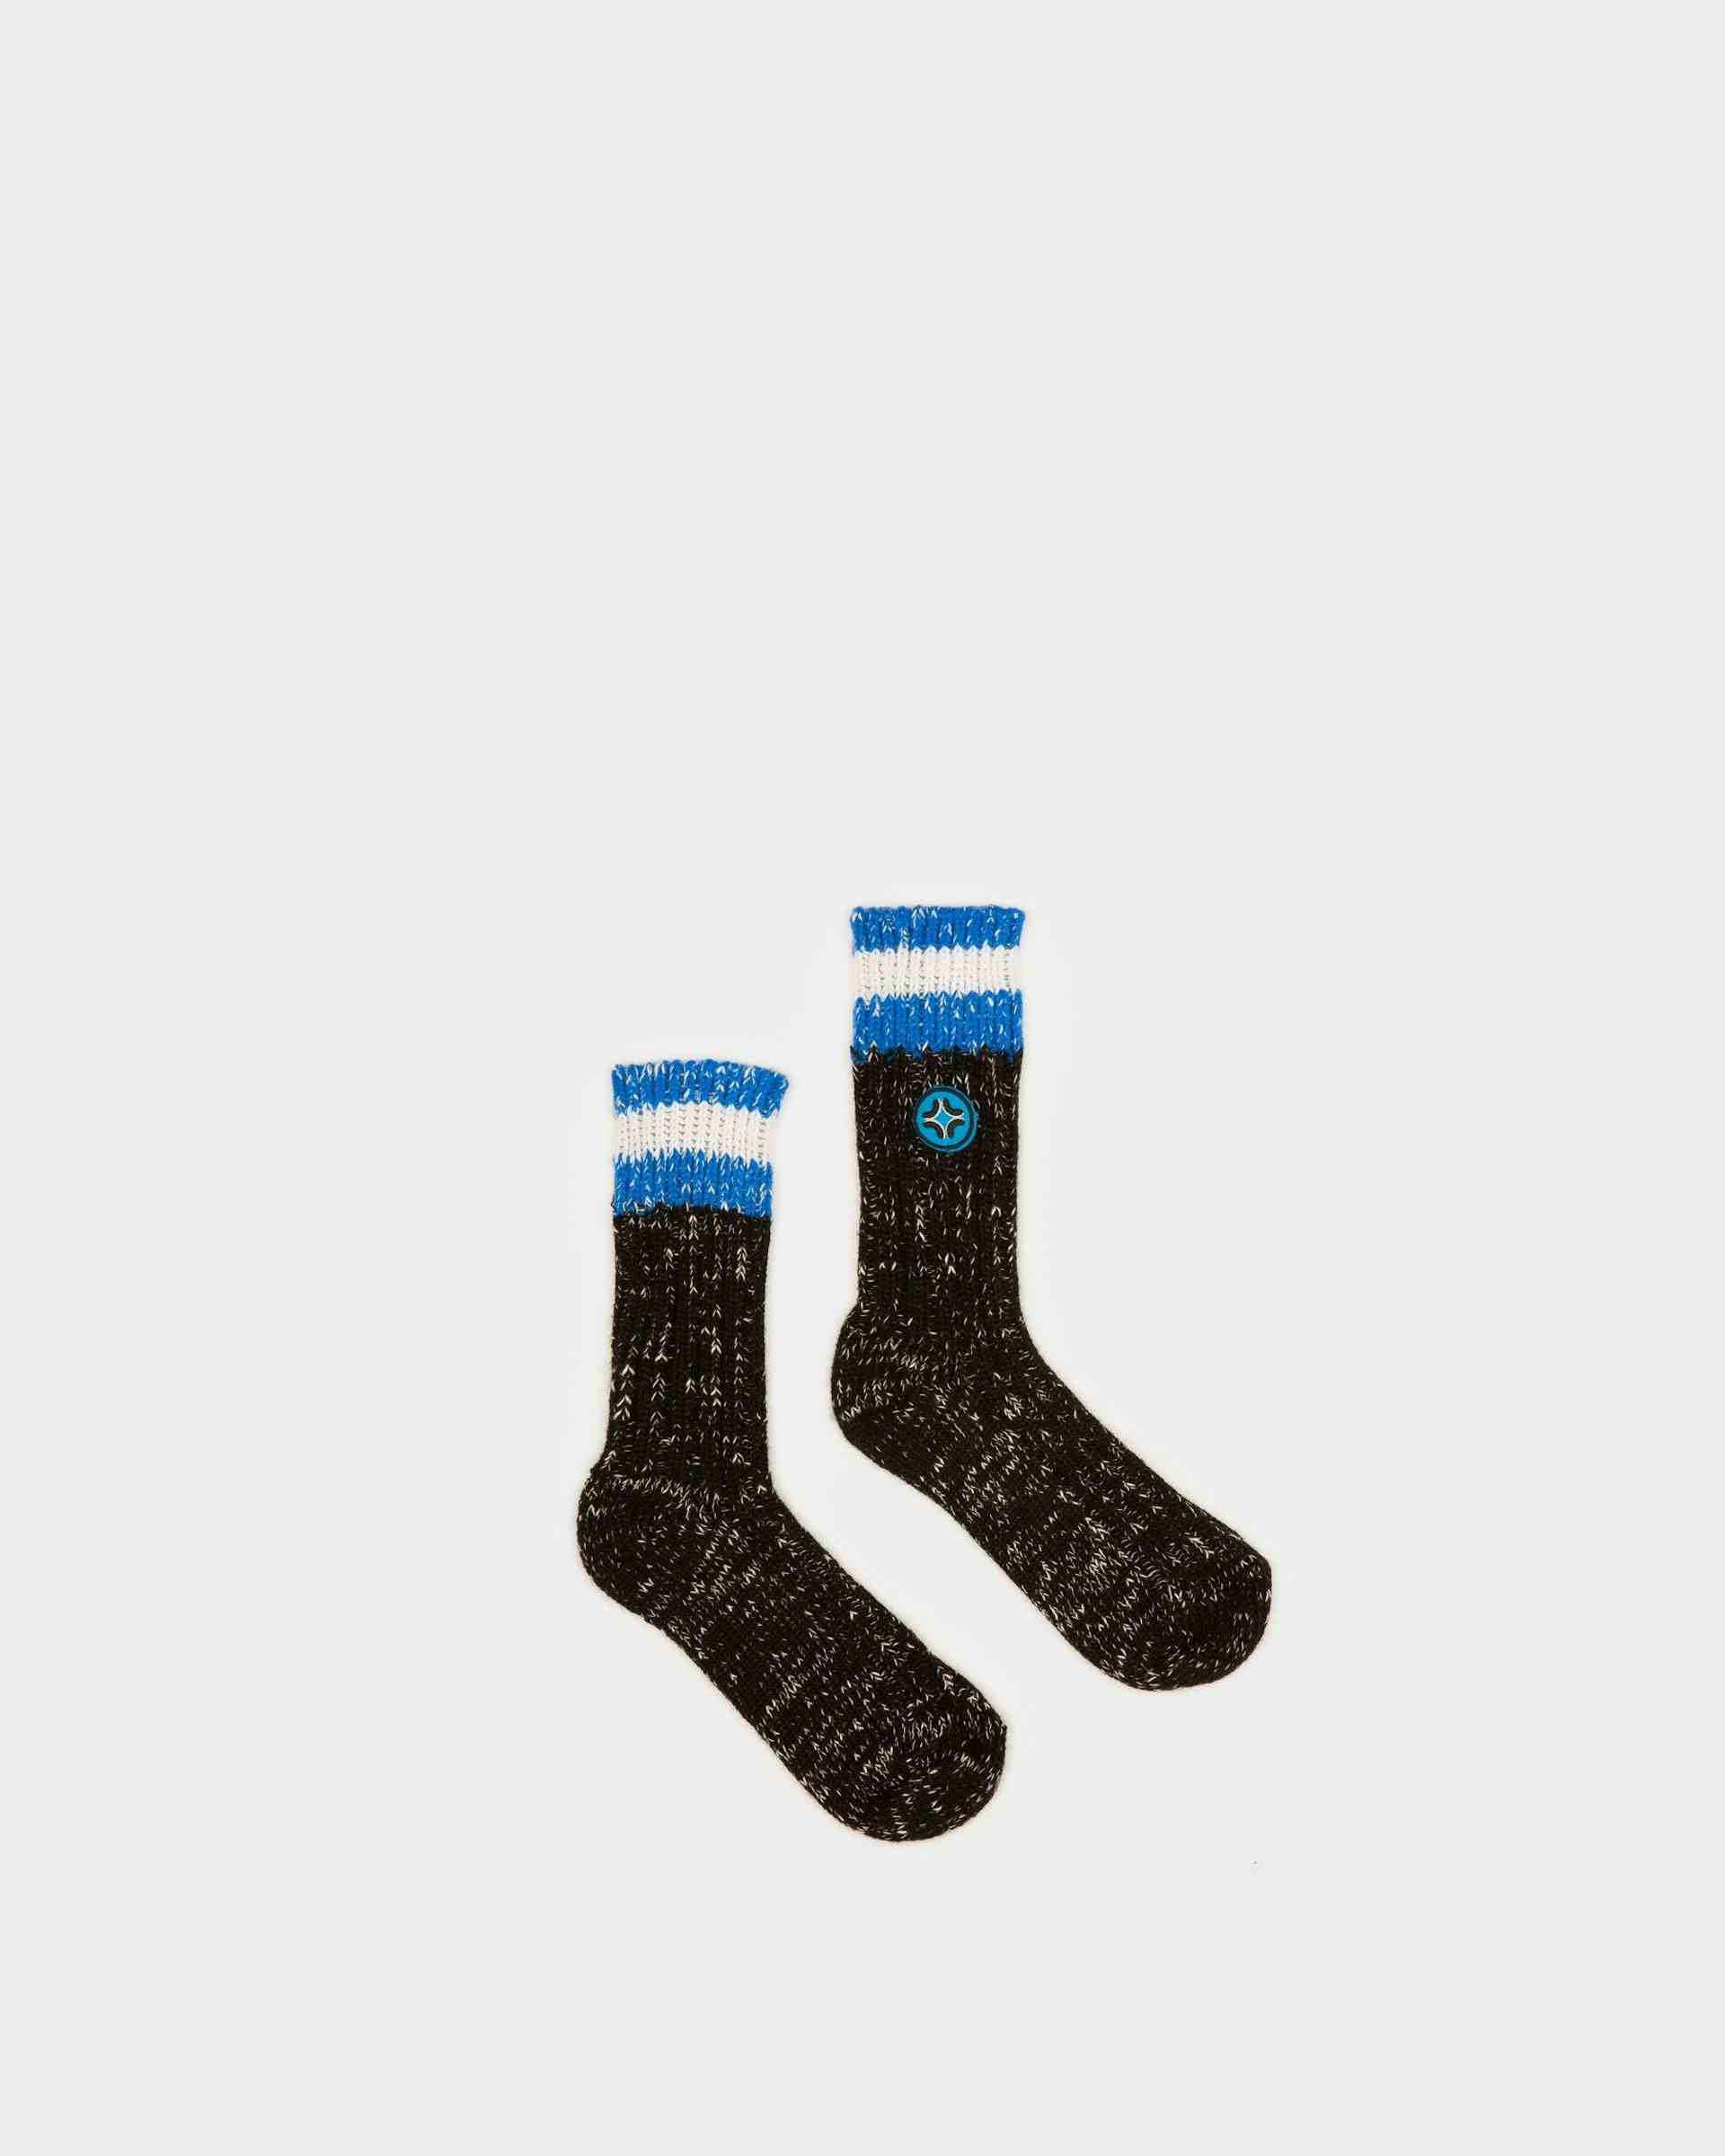 Cotton Socks In Blue & Black - Men's - Bally